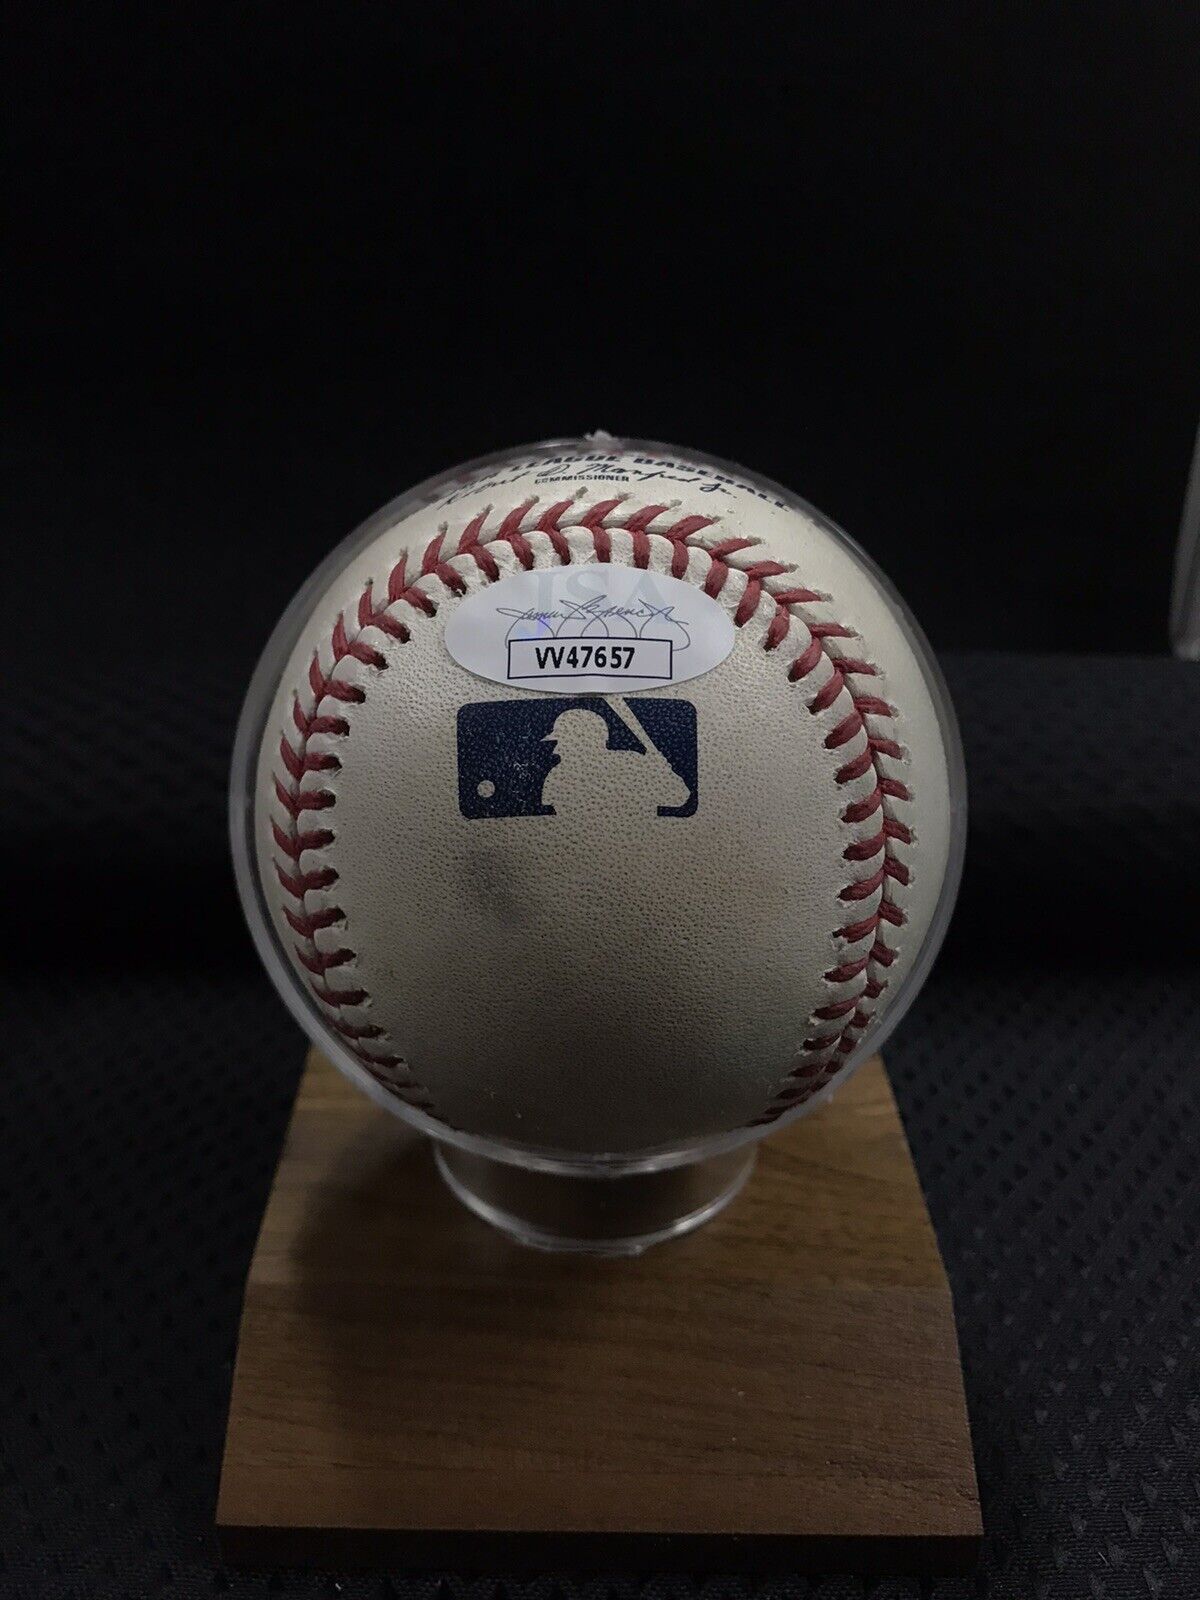 Joc Pederson Autographed Official MLB Baseball